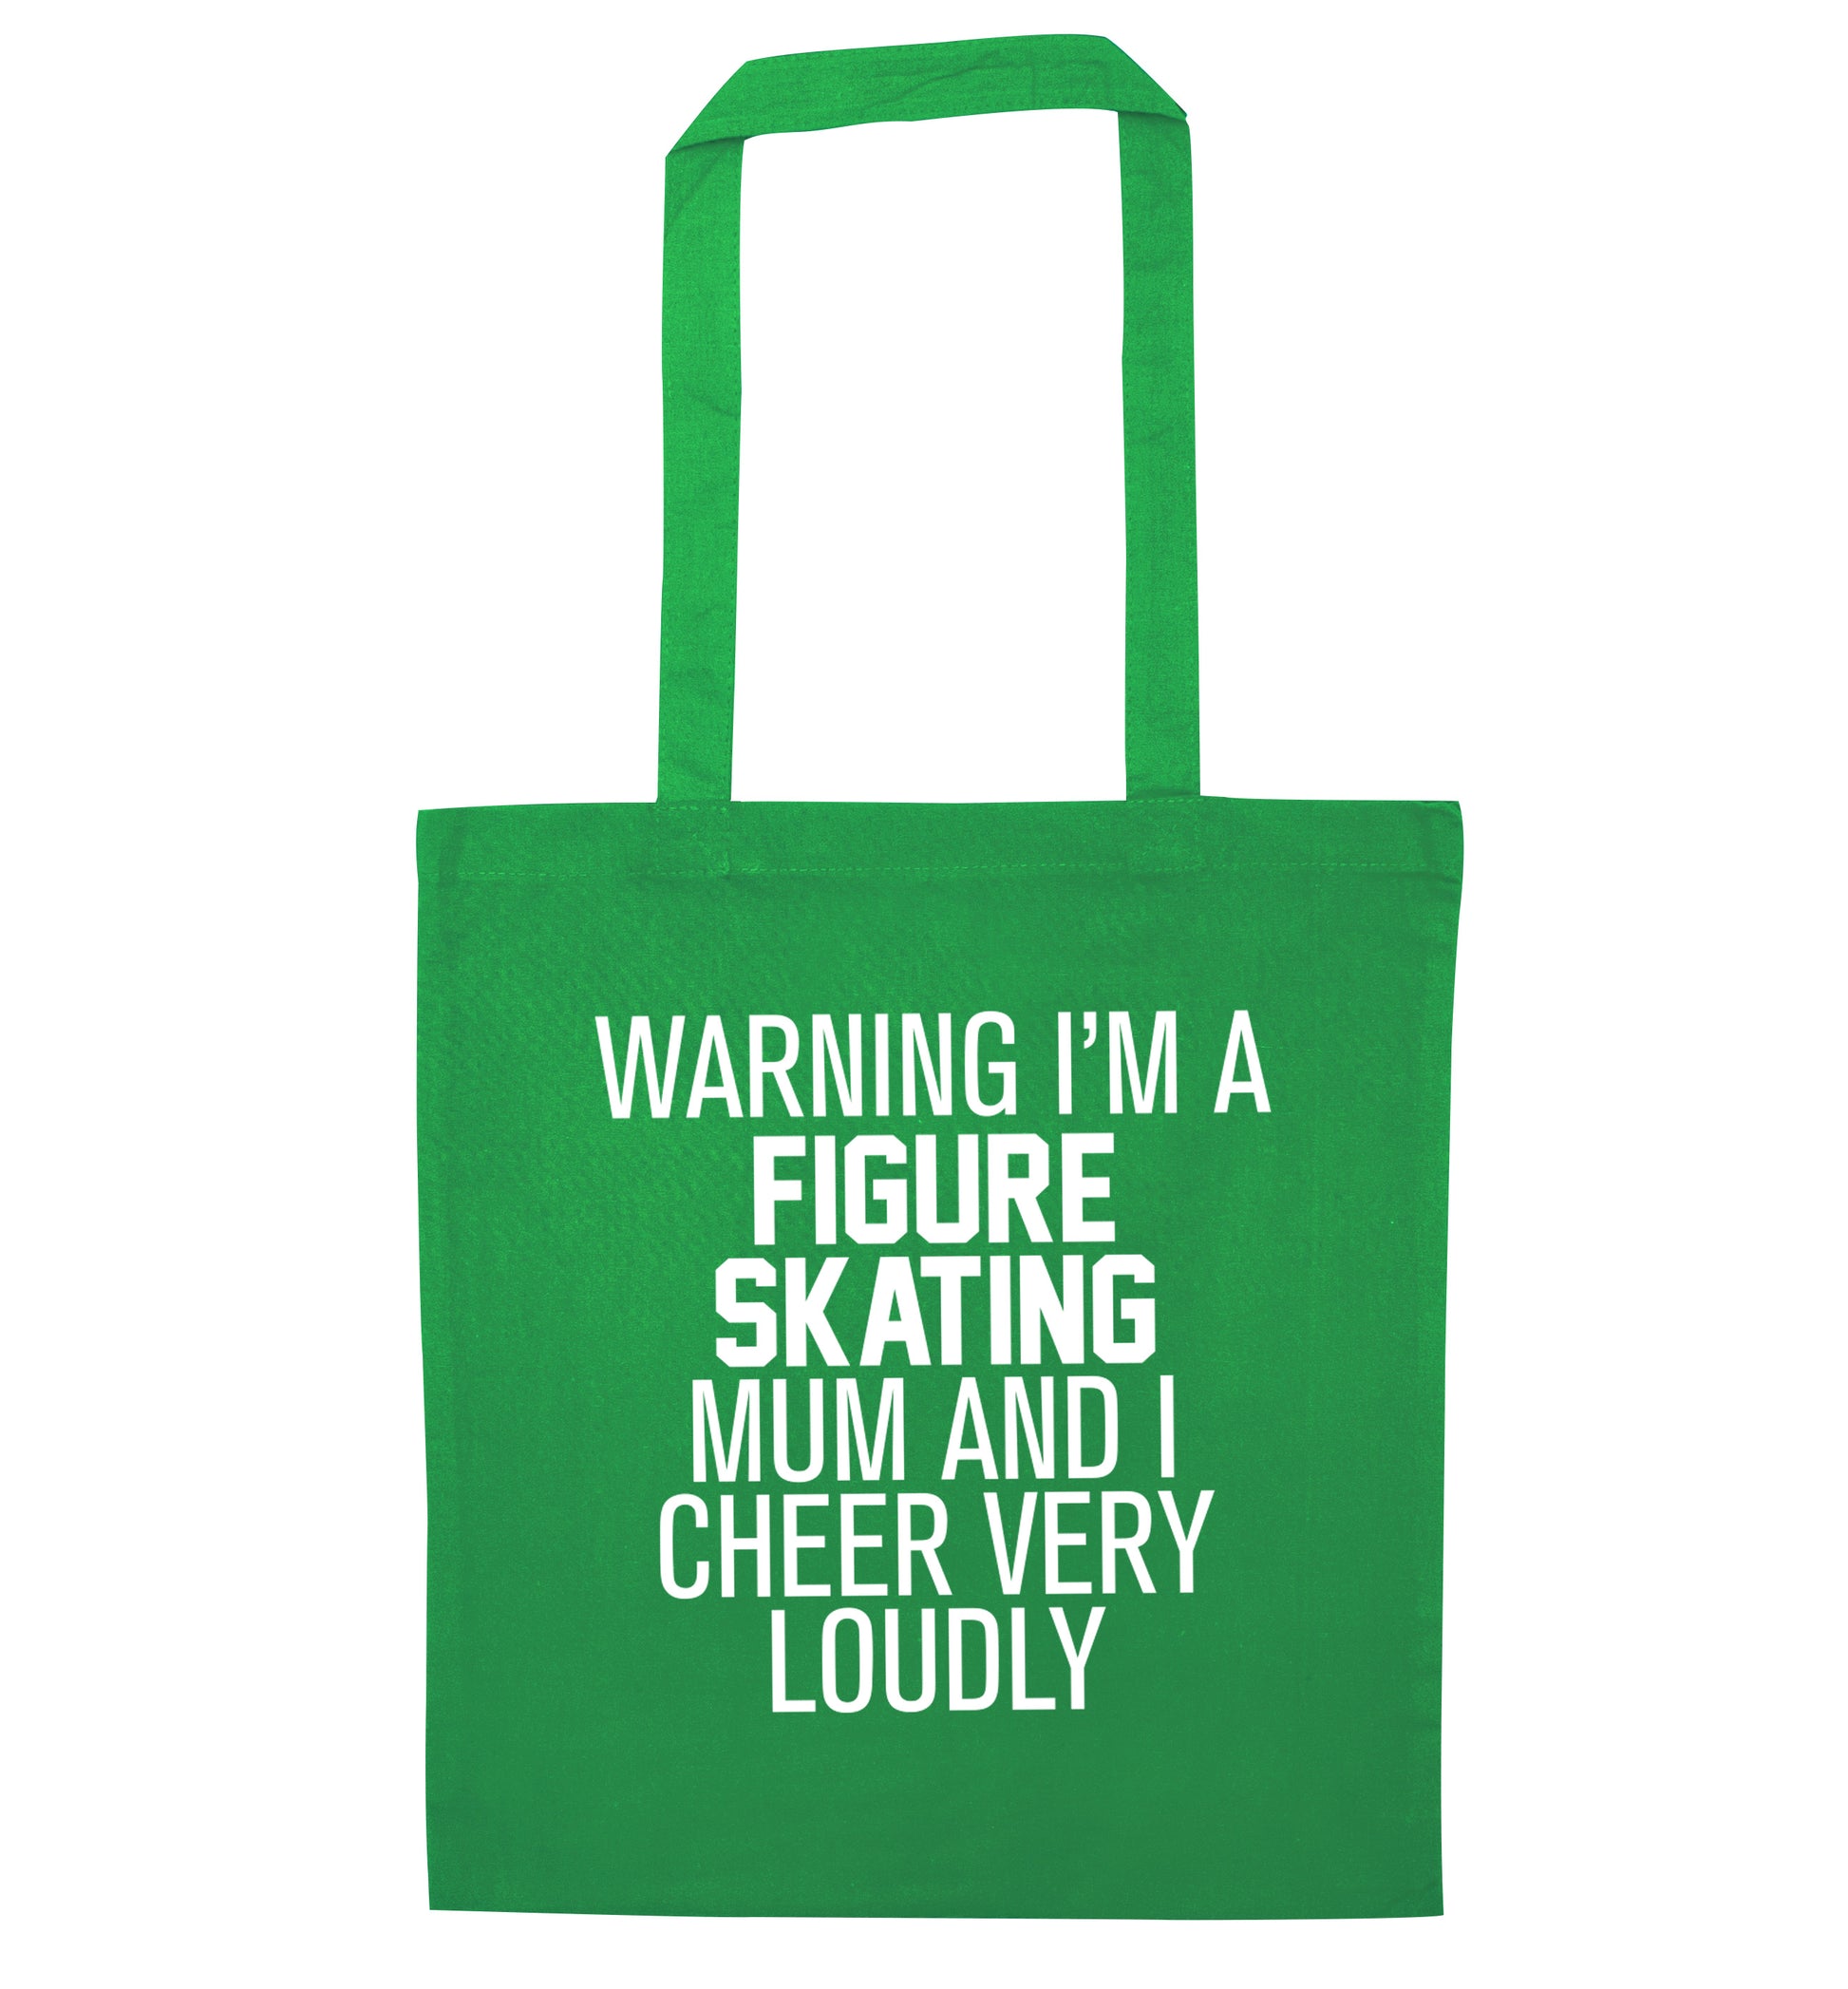 Warning I'm a figure skating mum and I cheer very loudly green tote bag